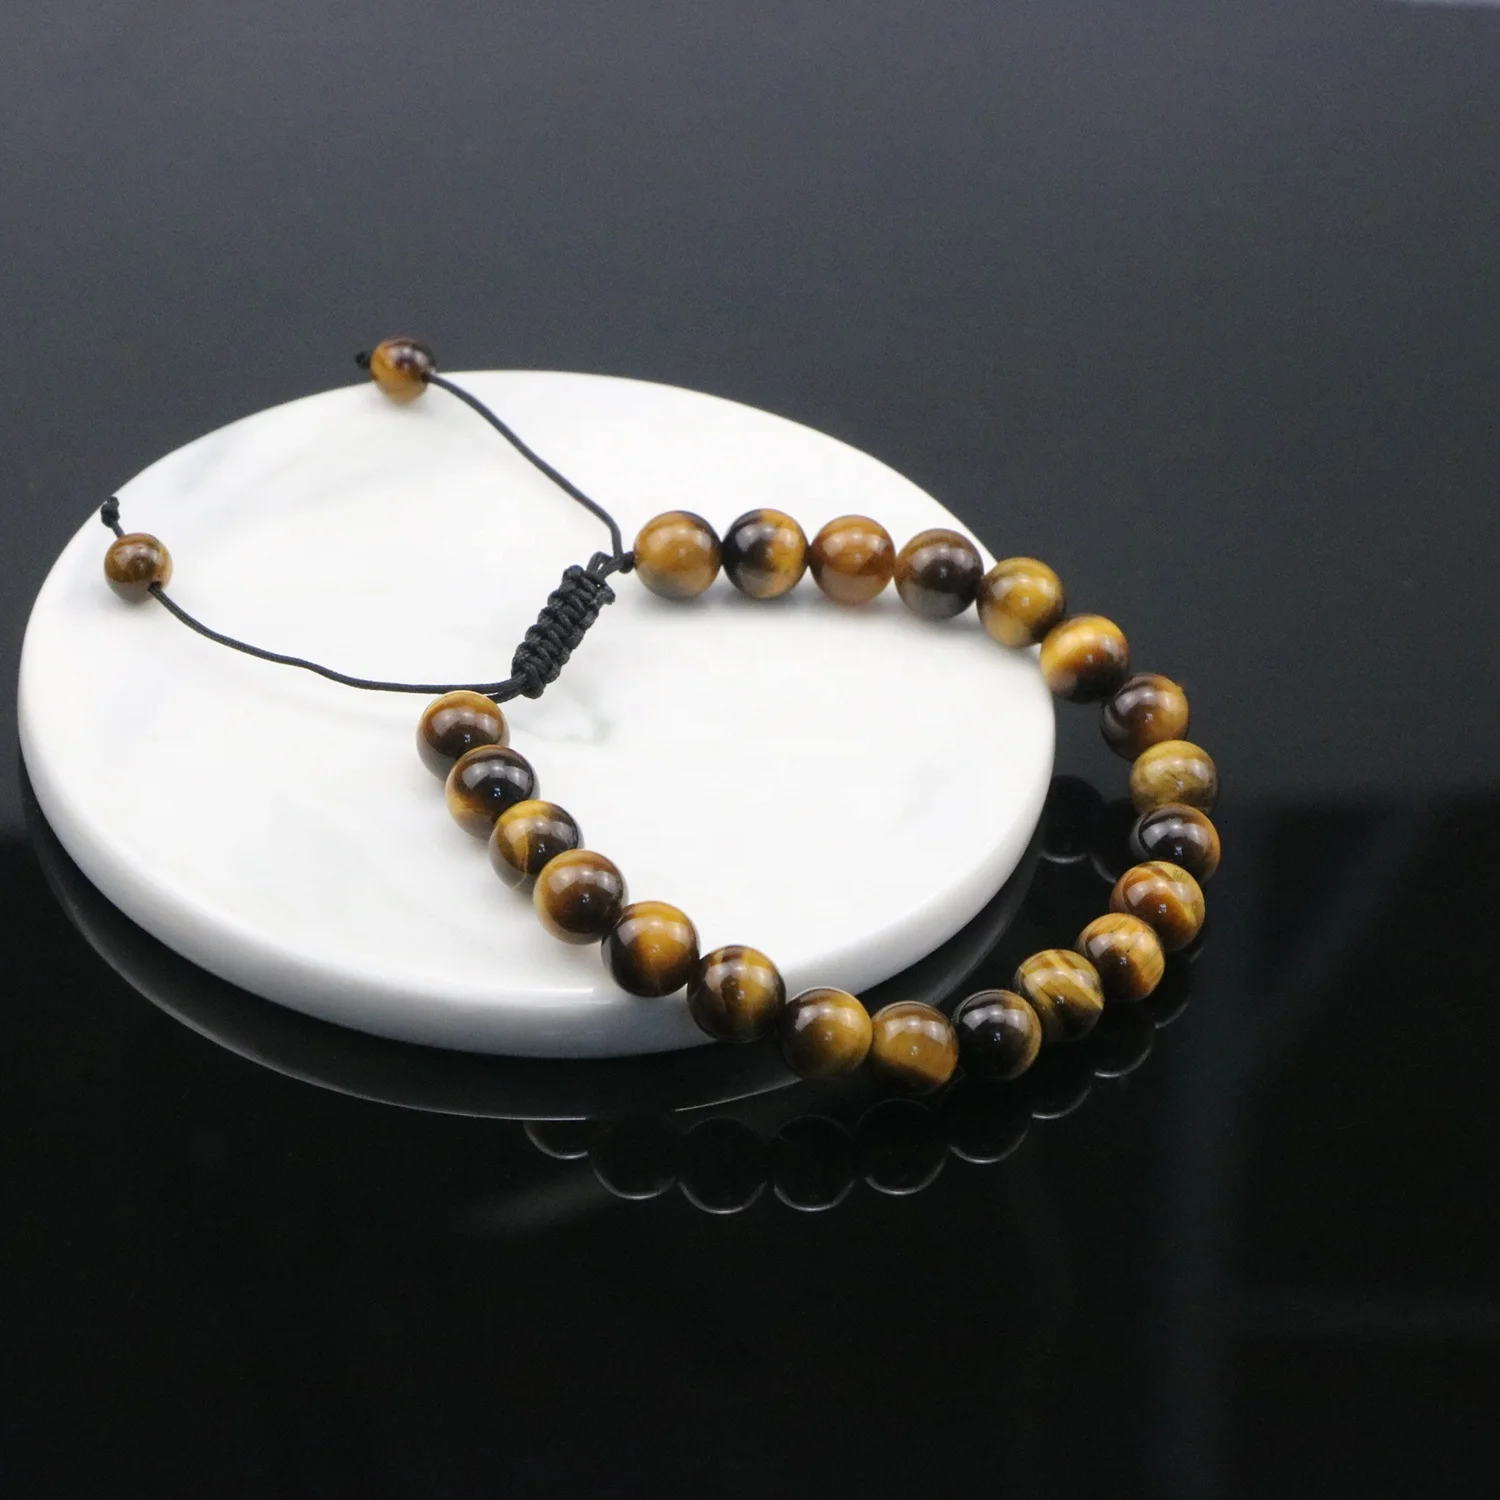  Joycuff Healing Jewelry Set Handmade Natural Stone Lava Bead Tiger Eye Bracelet